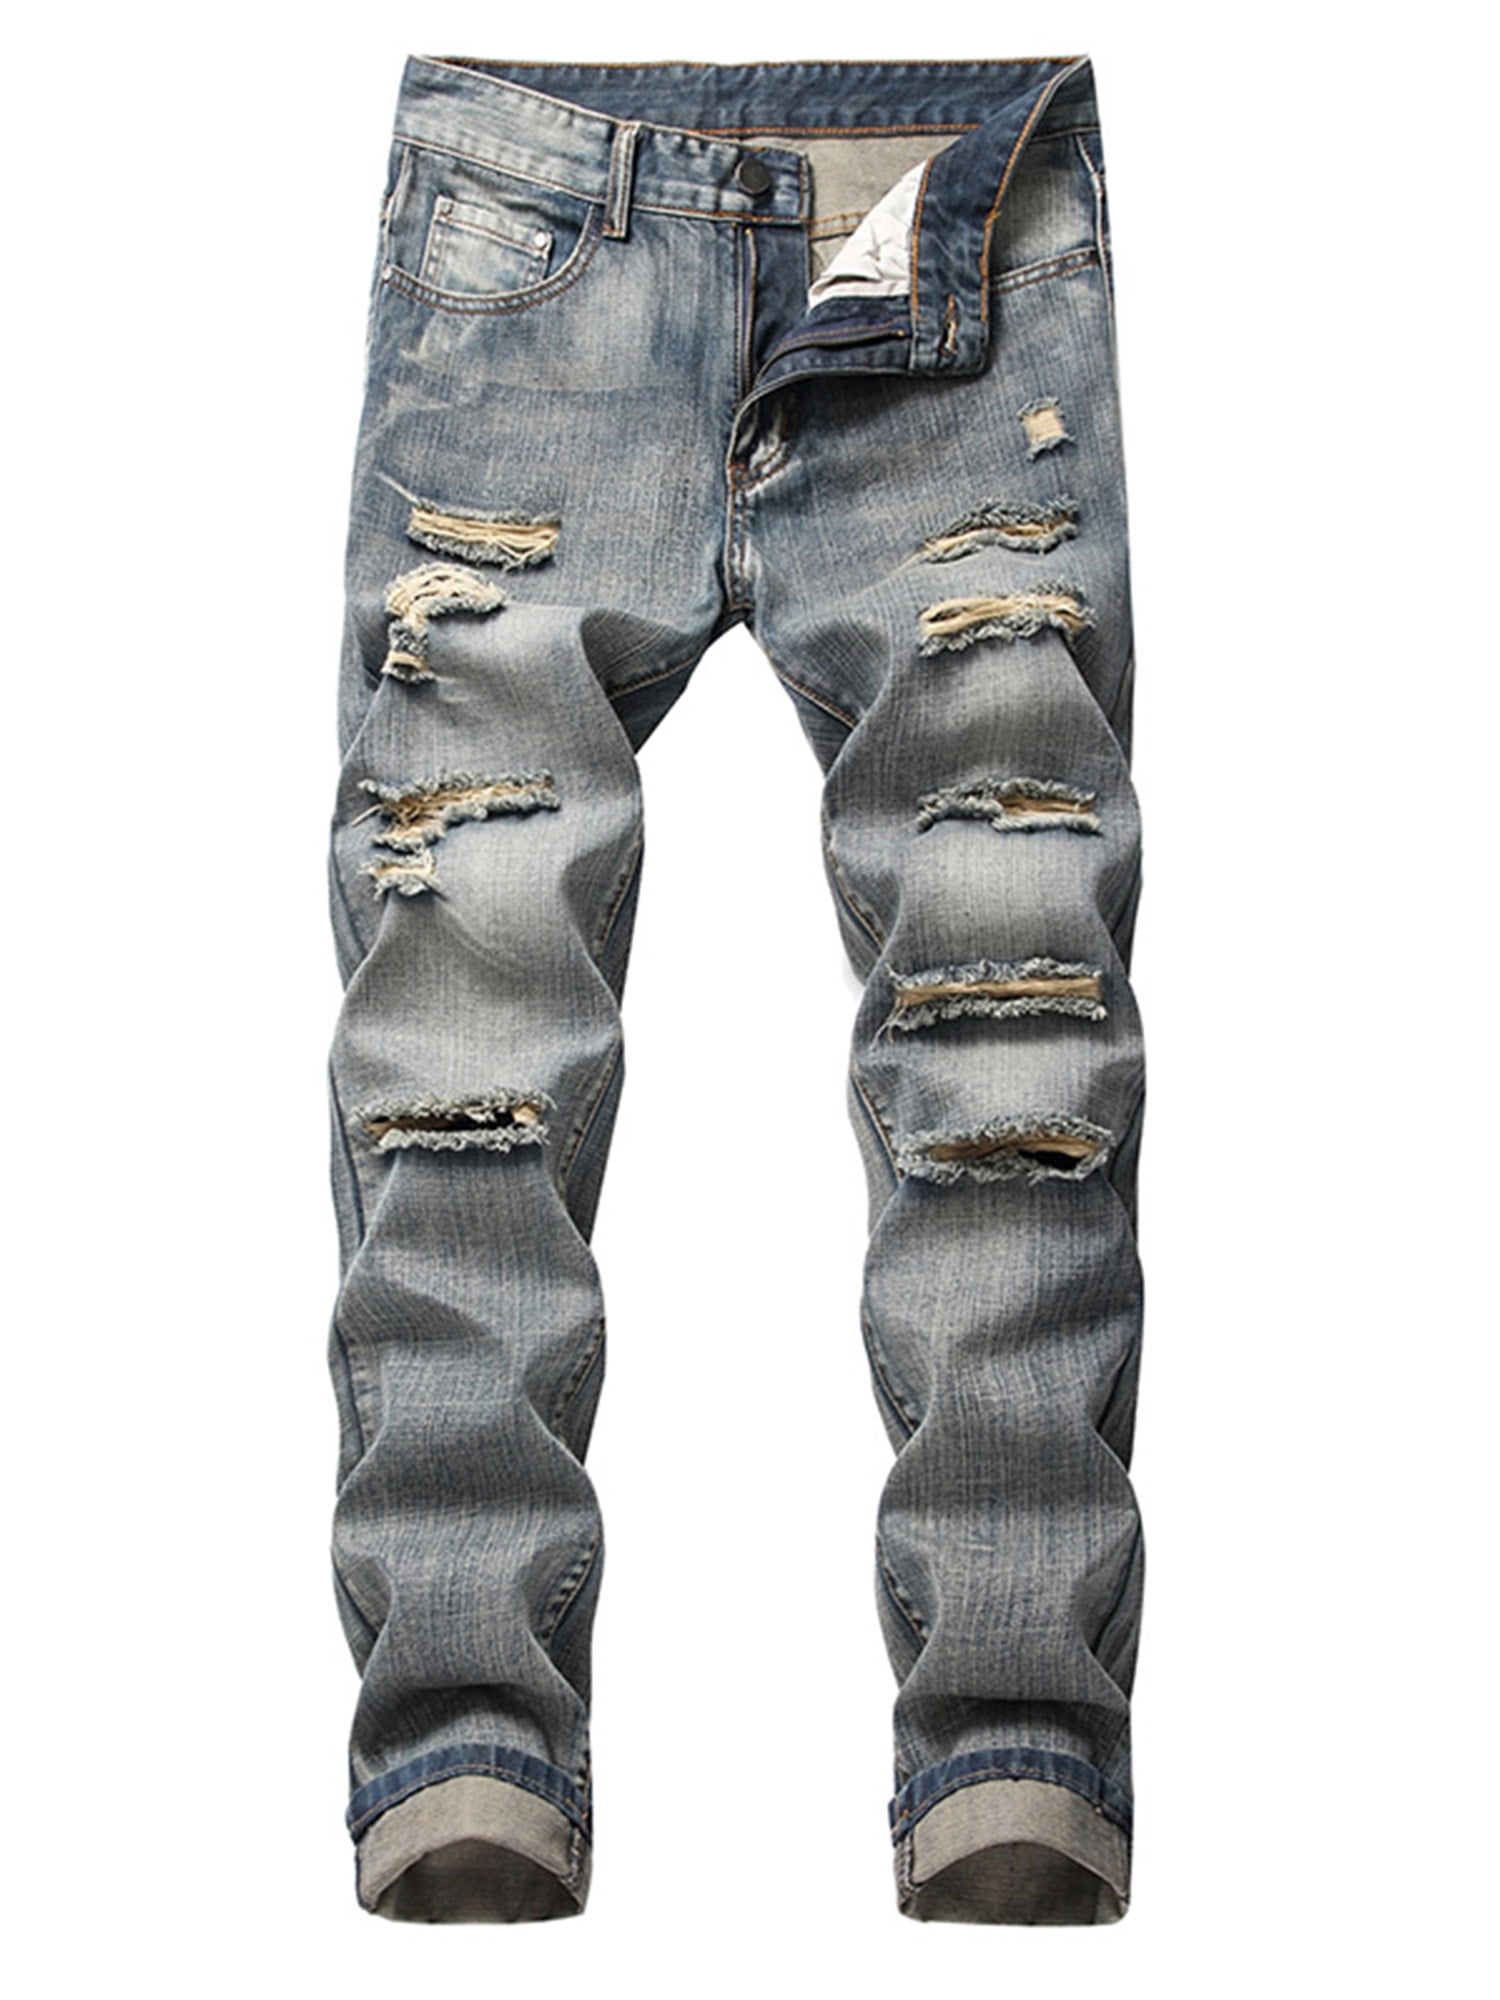 Men's Biker Pant Fashion Knee Holes Slim Fit Ripped Jeans Skinny Denim  Trousers | eBay